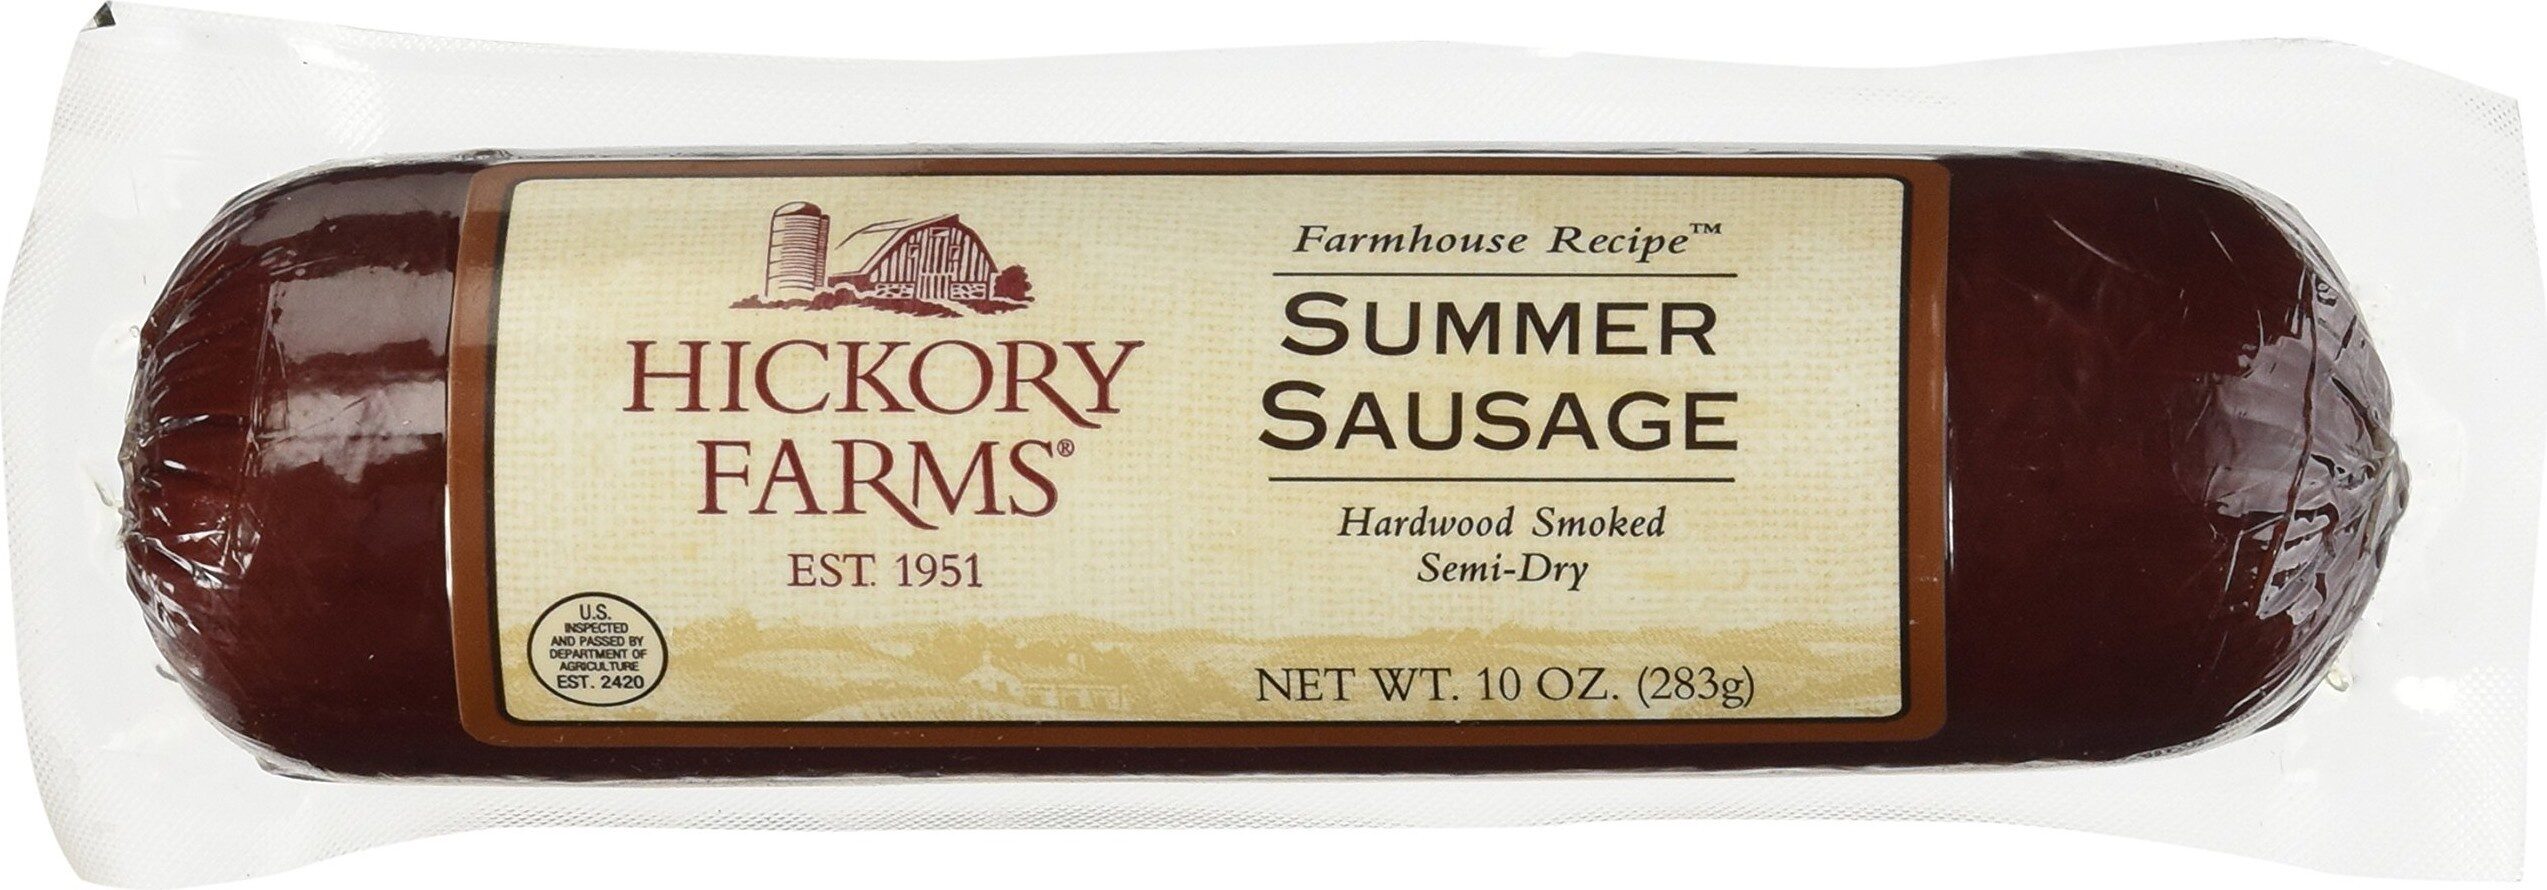 Summer sausage hardwood smoked - Product